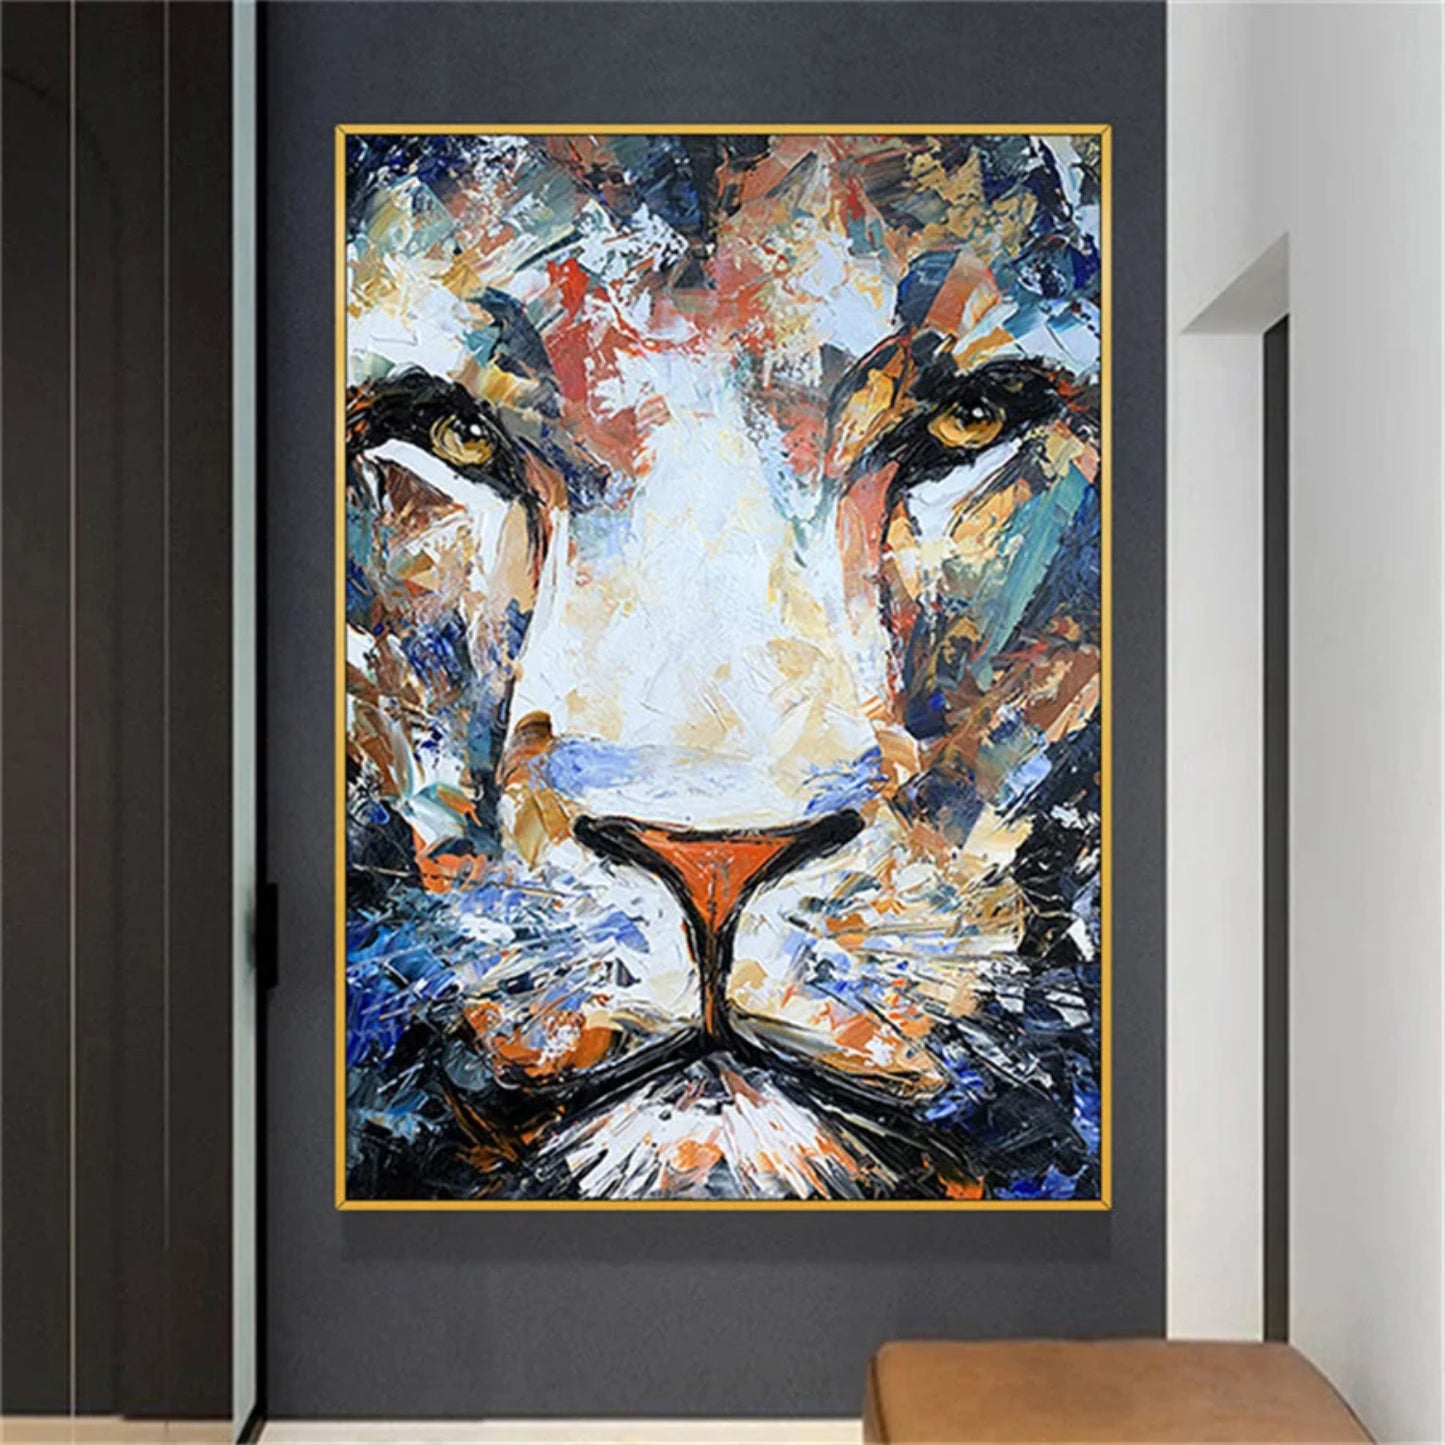 Colourful Lion Graffiti Art with Diamond Texture